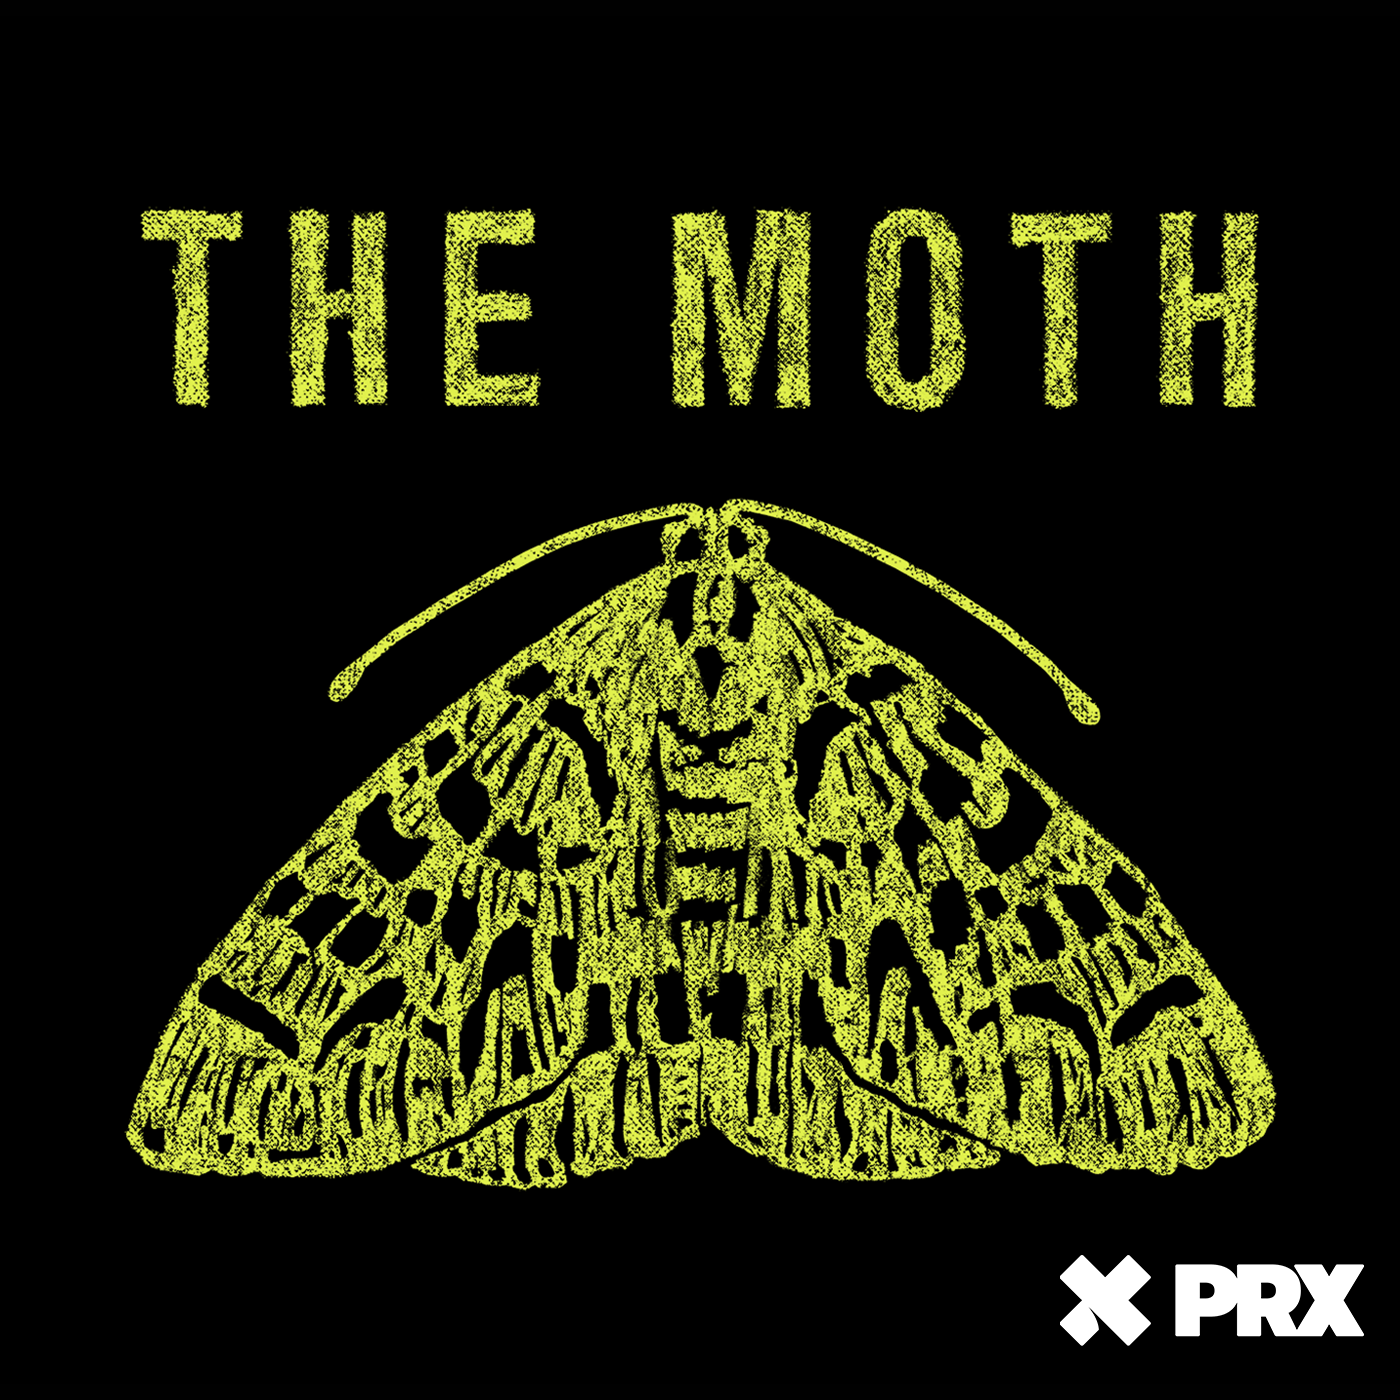 The Moth Radio Hour: Bearing Witness